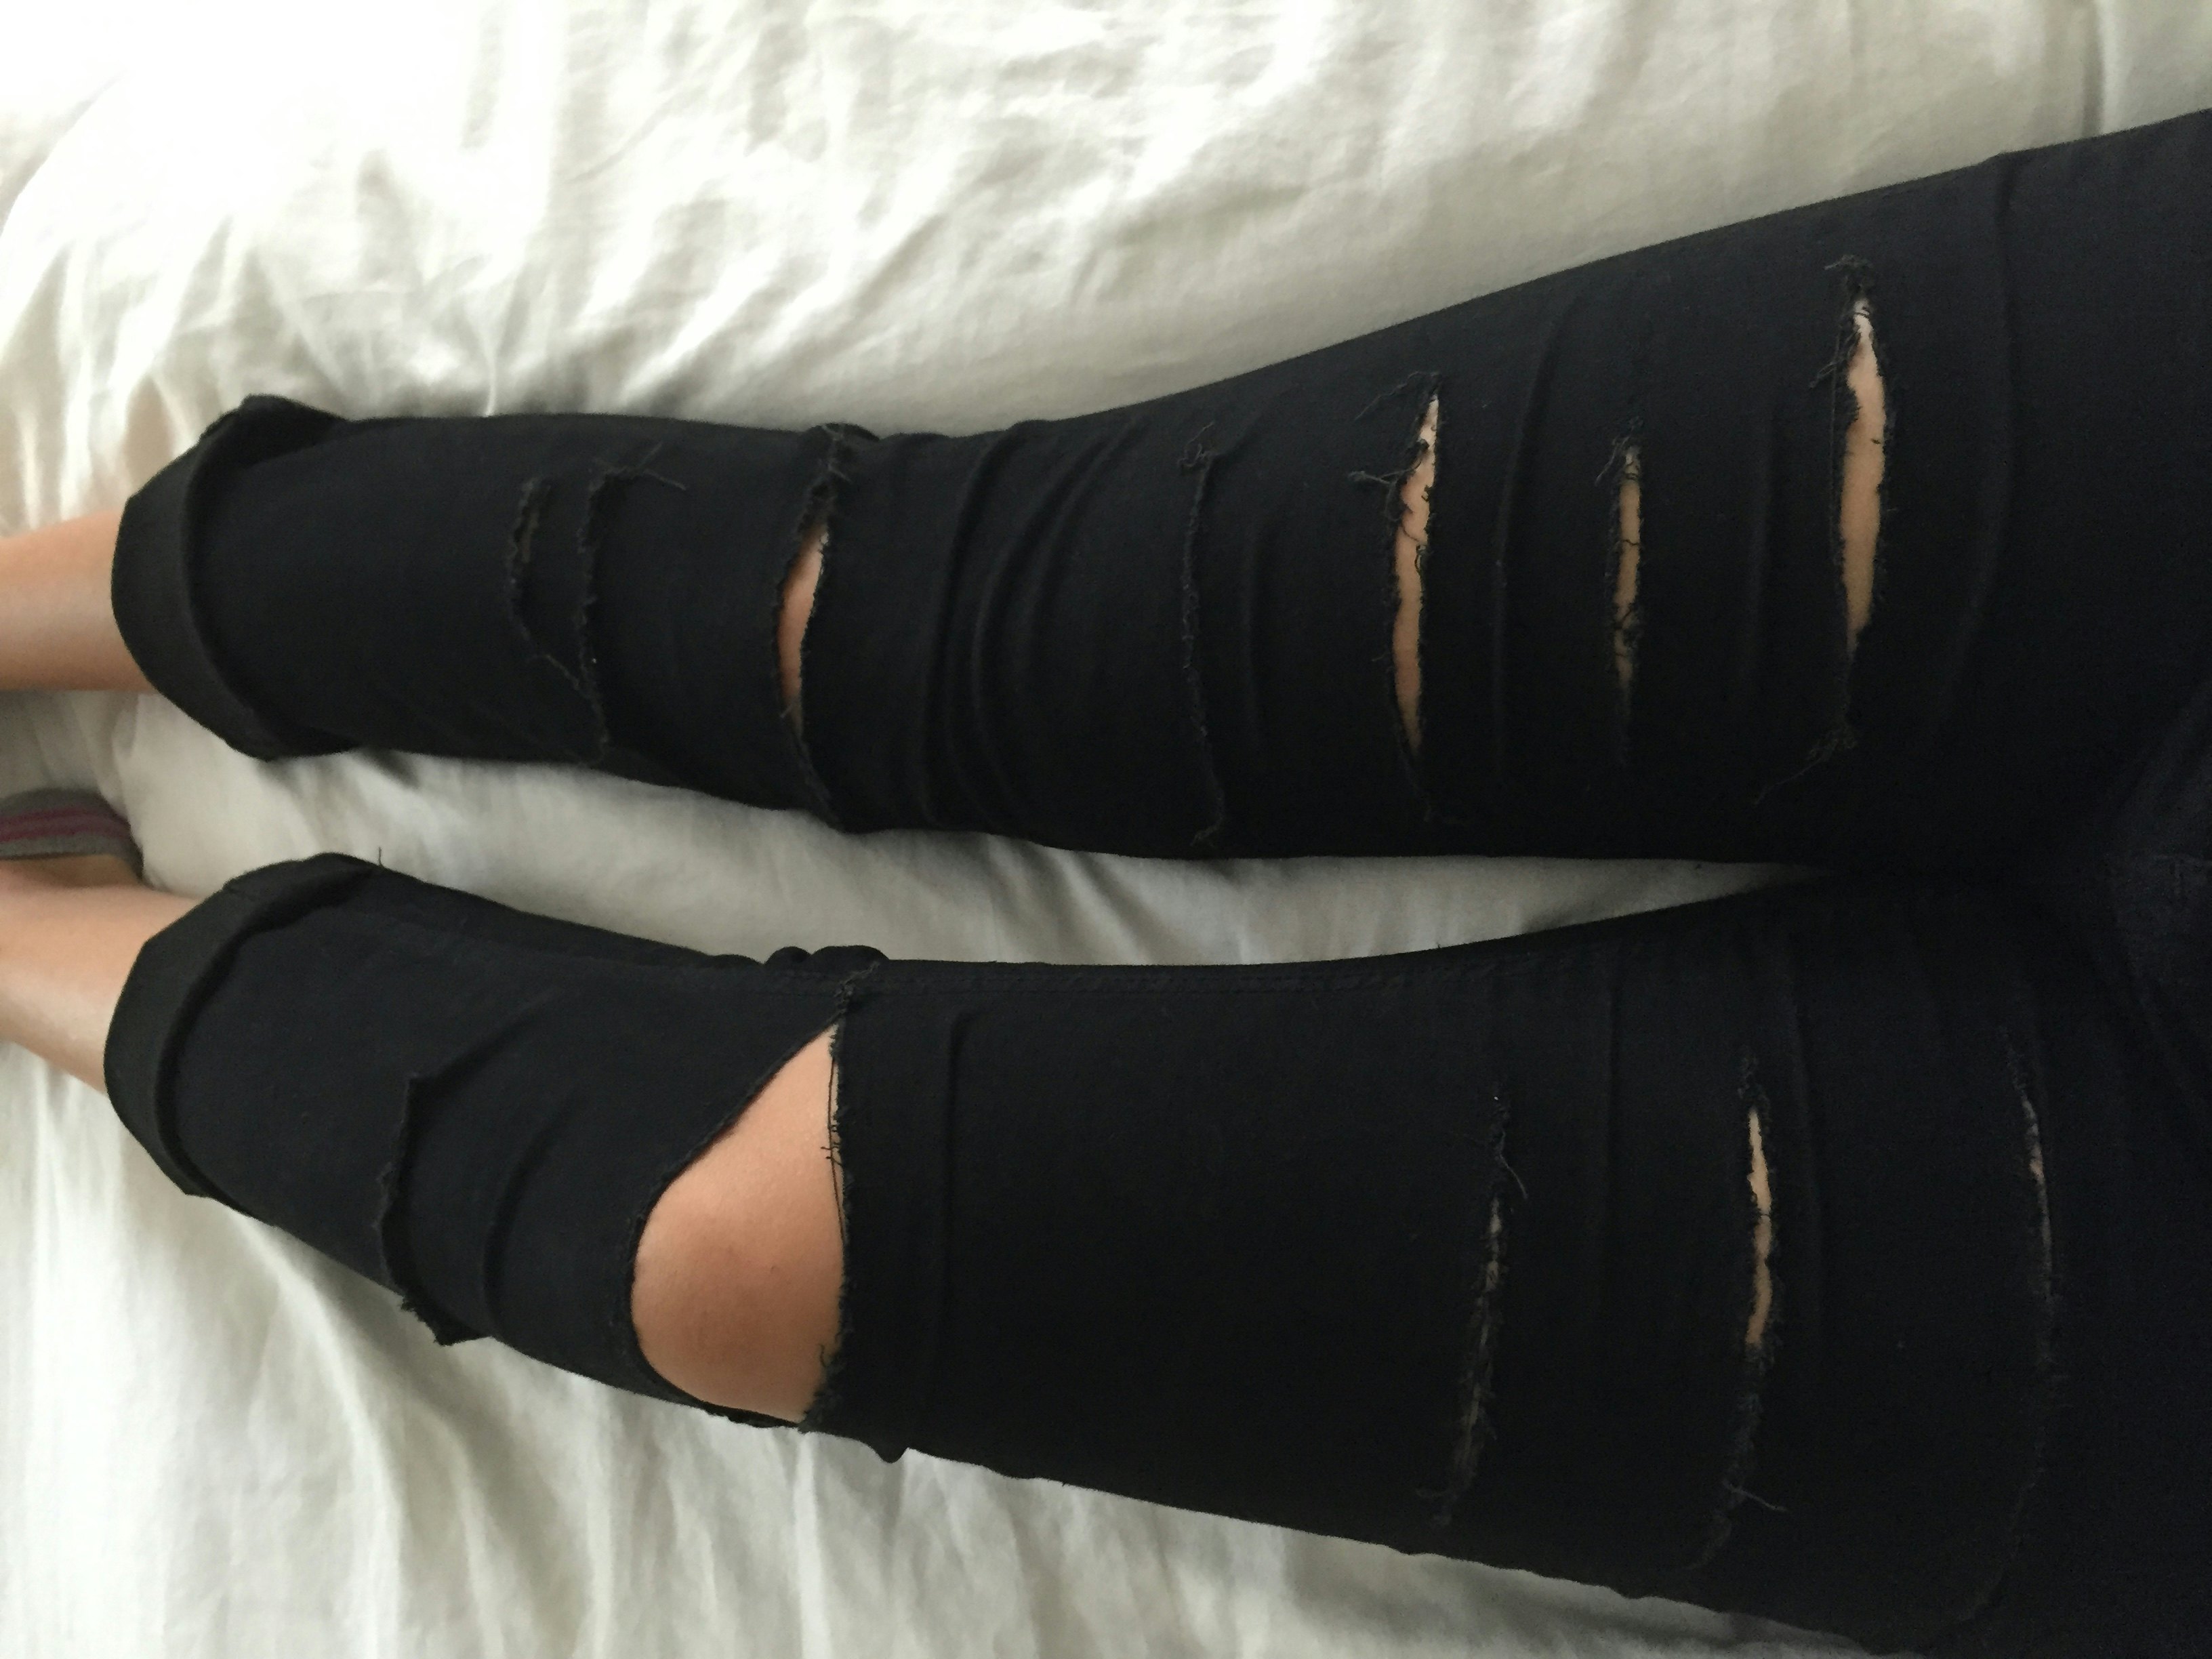 tattered black jeans